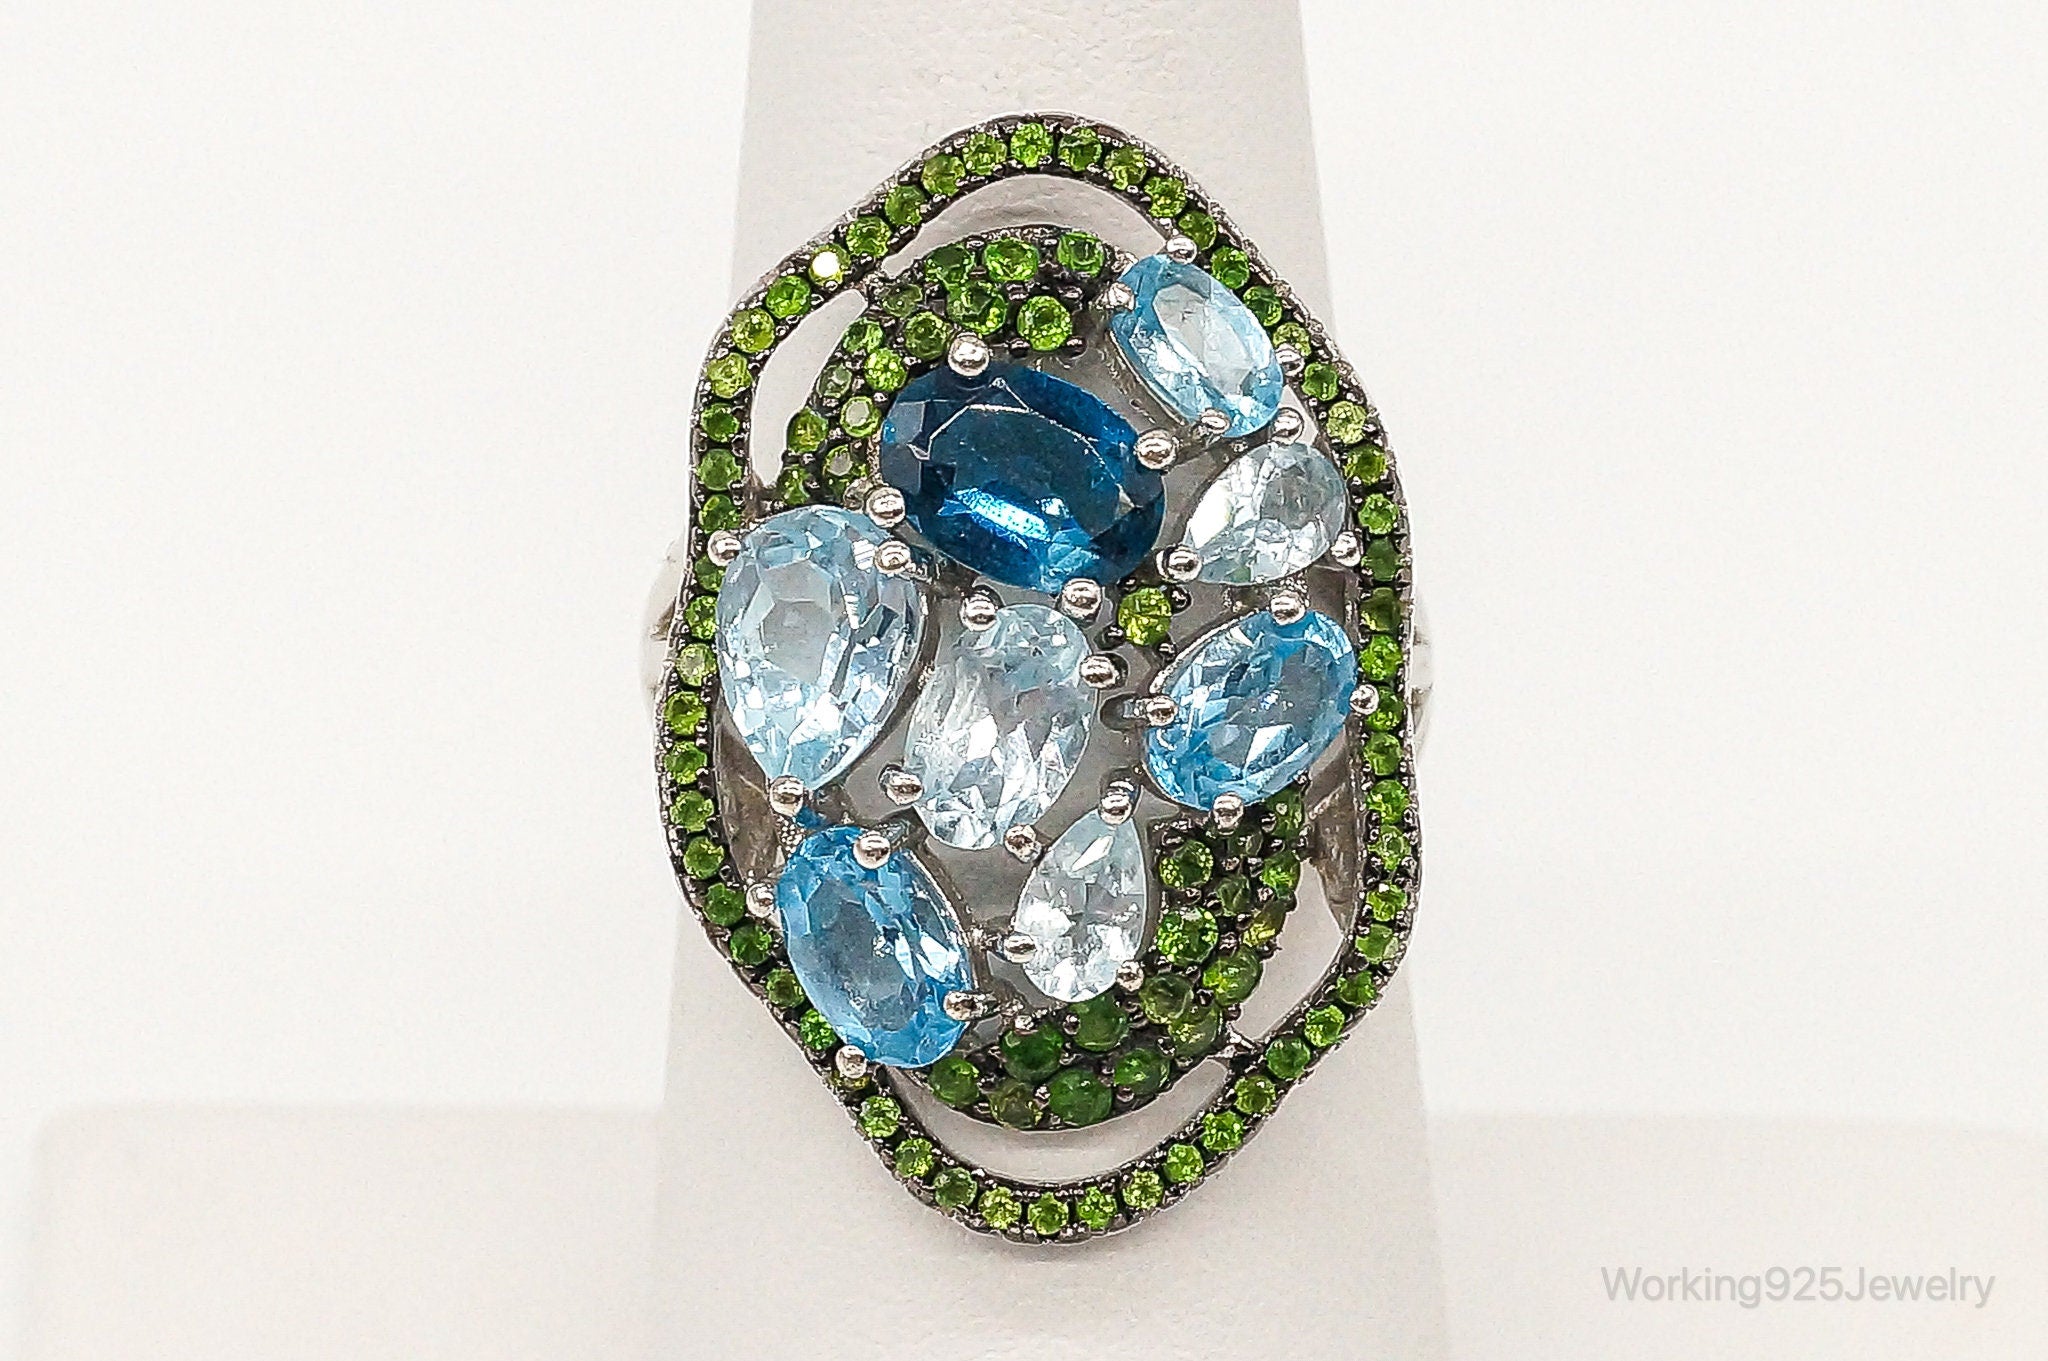 Designer PJM Blue Topaz Aquamarine Peridot Sterling Silver Ring - Size 6.25